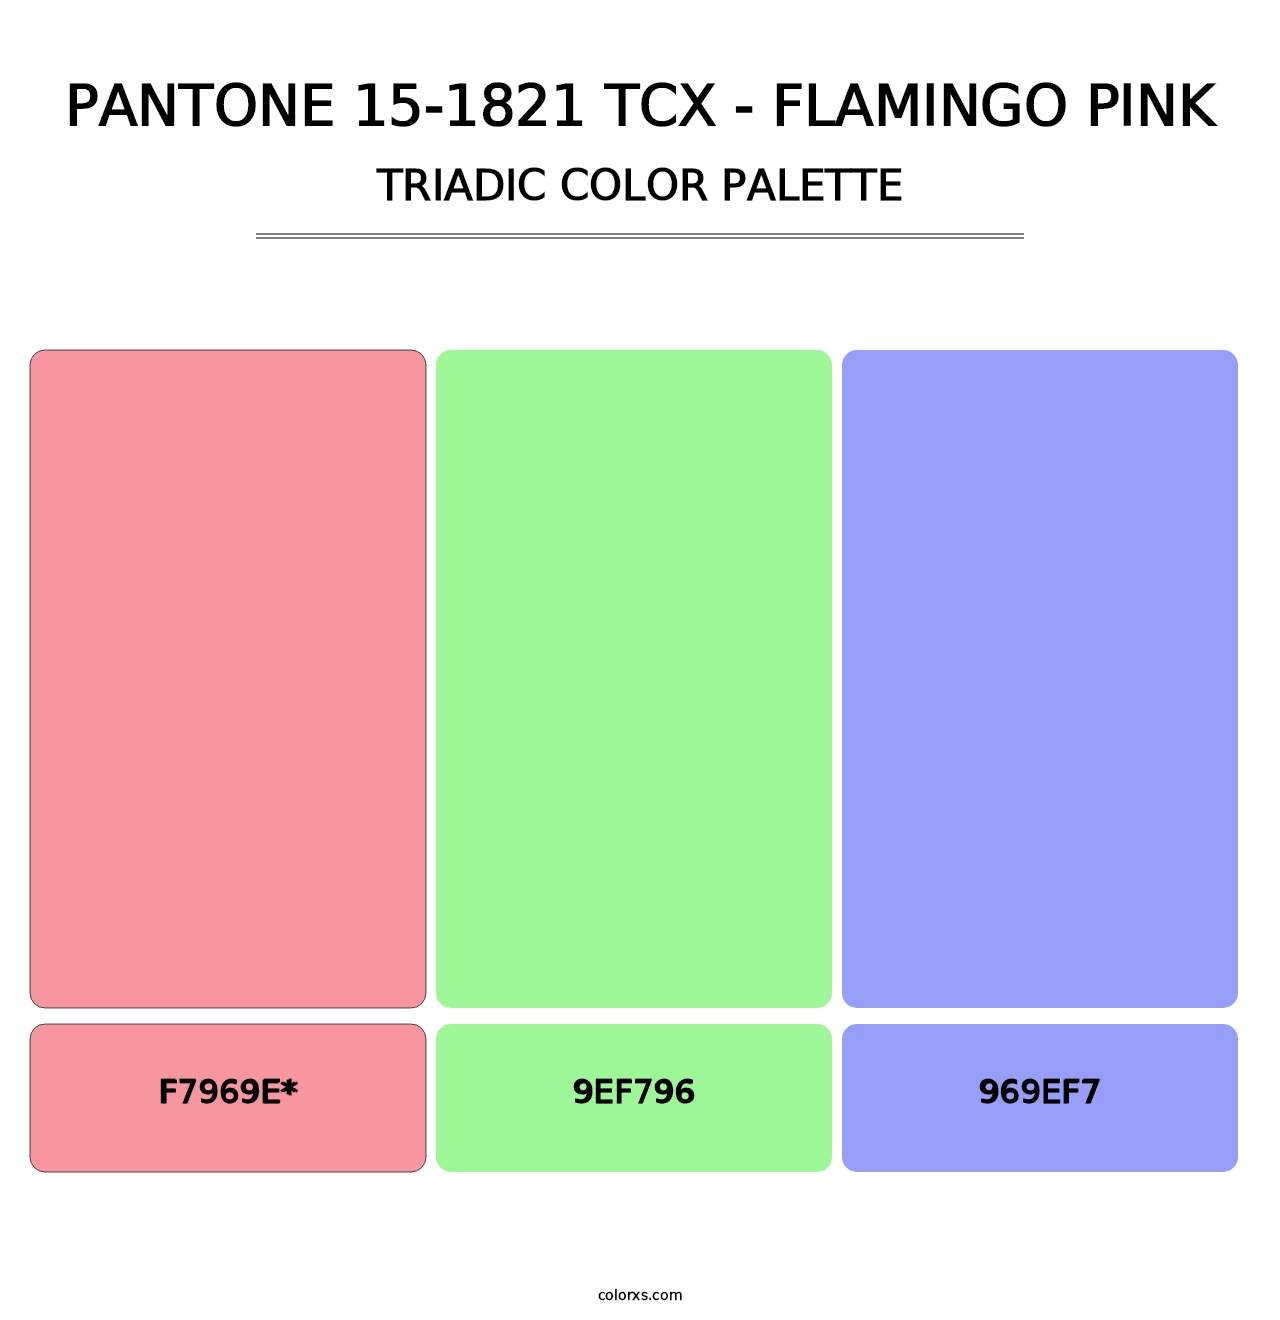 PANTONE 15-1821 TCX - Flamingo Pink - Triadic Color Palette